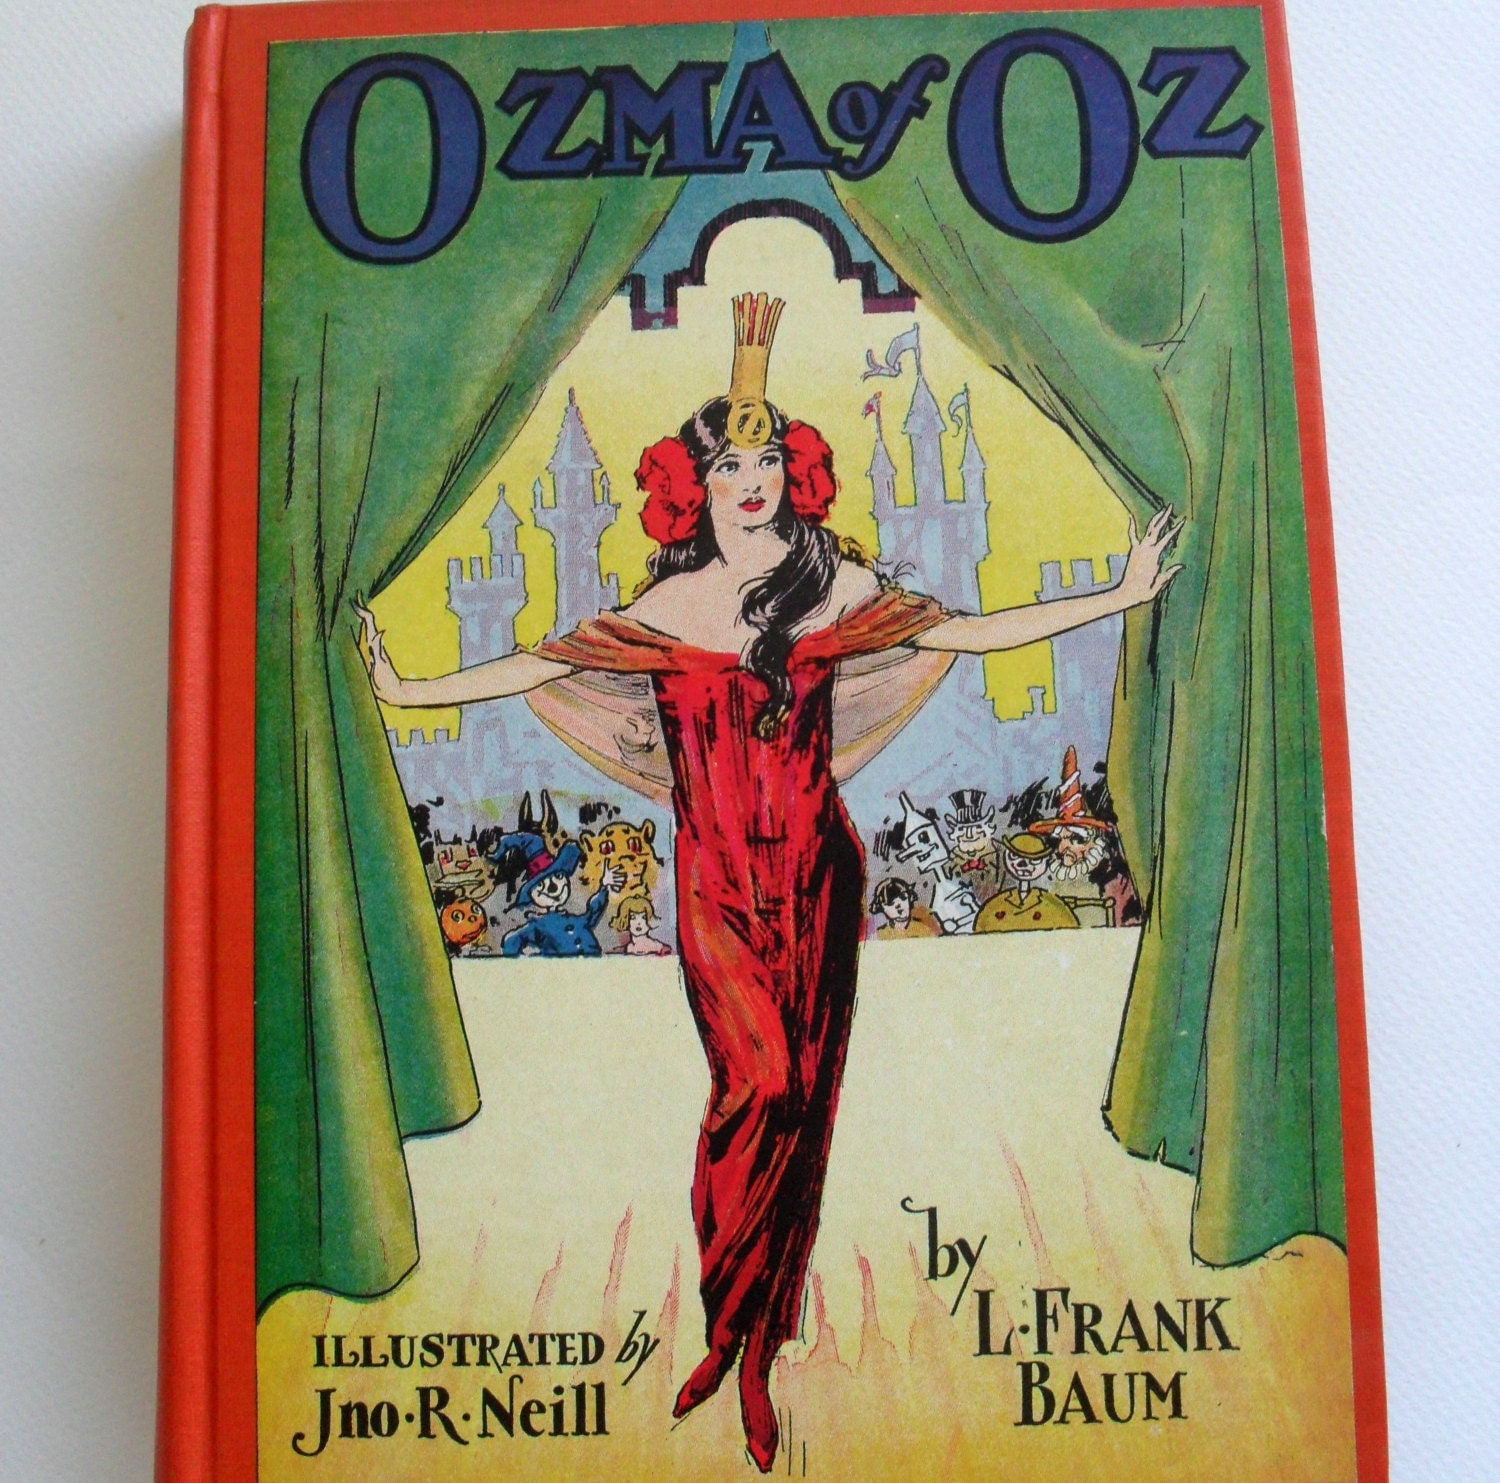 ozma of oz 1907